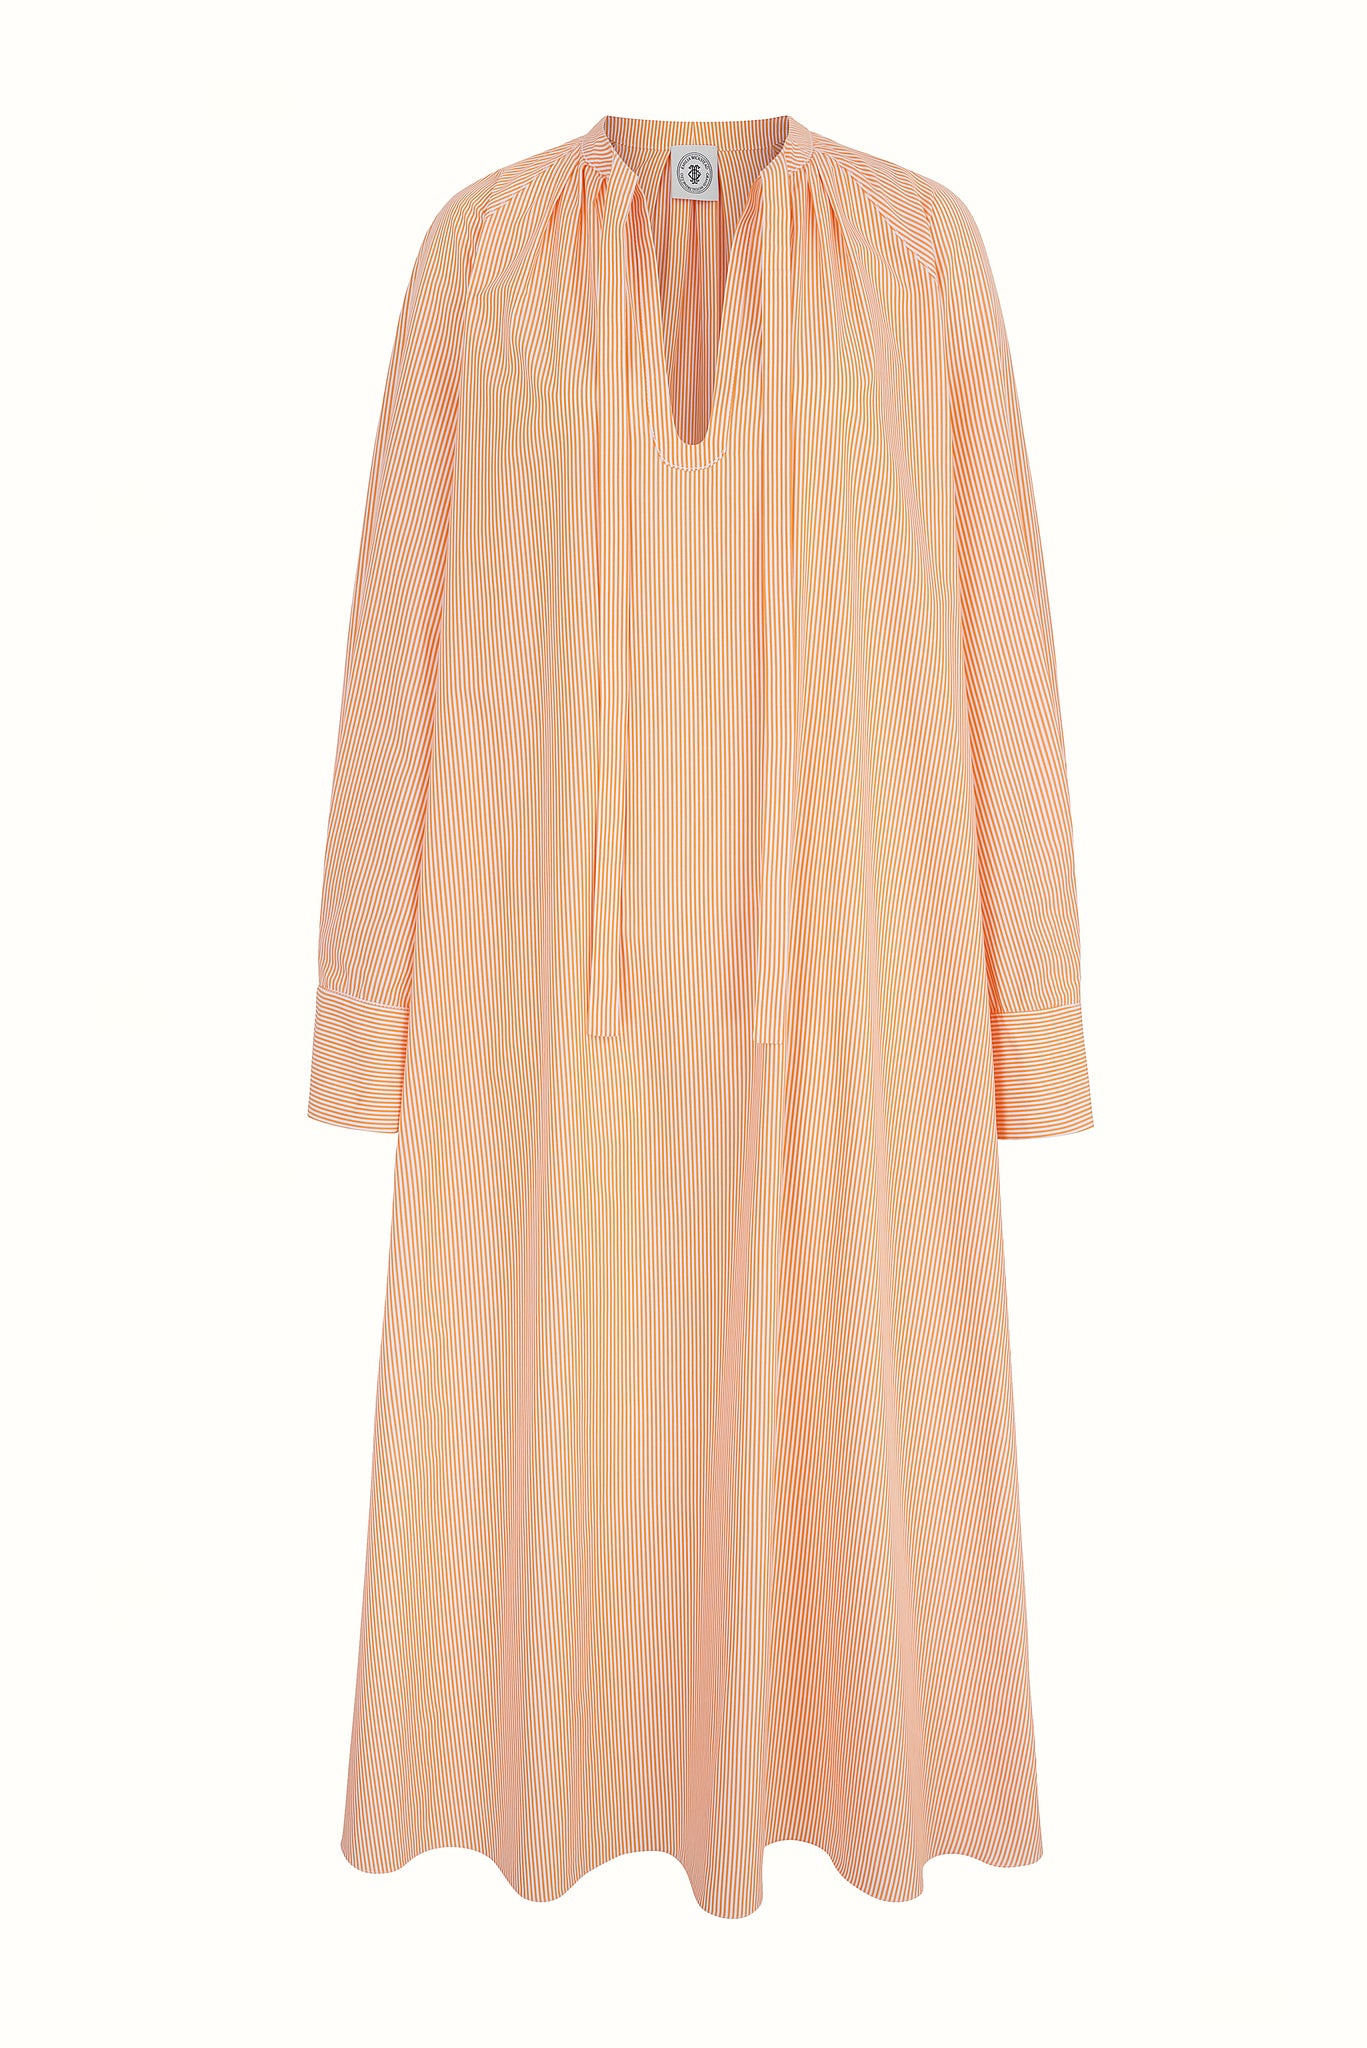 Emilia Wickstead X Passalacqua Kirby Dress In Orange Pencil Strip Cotton